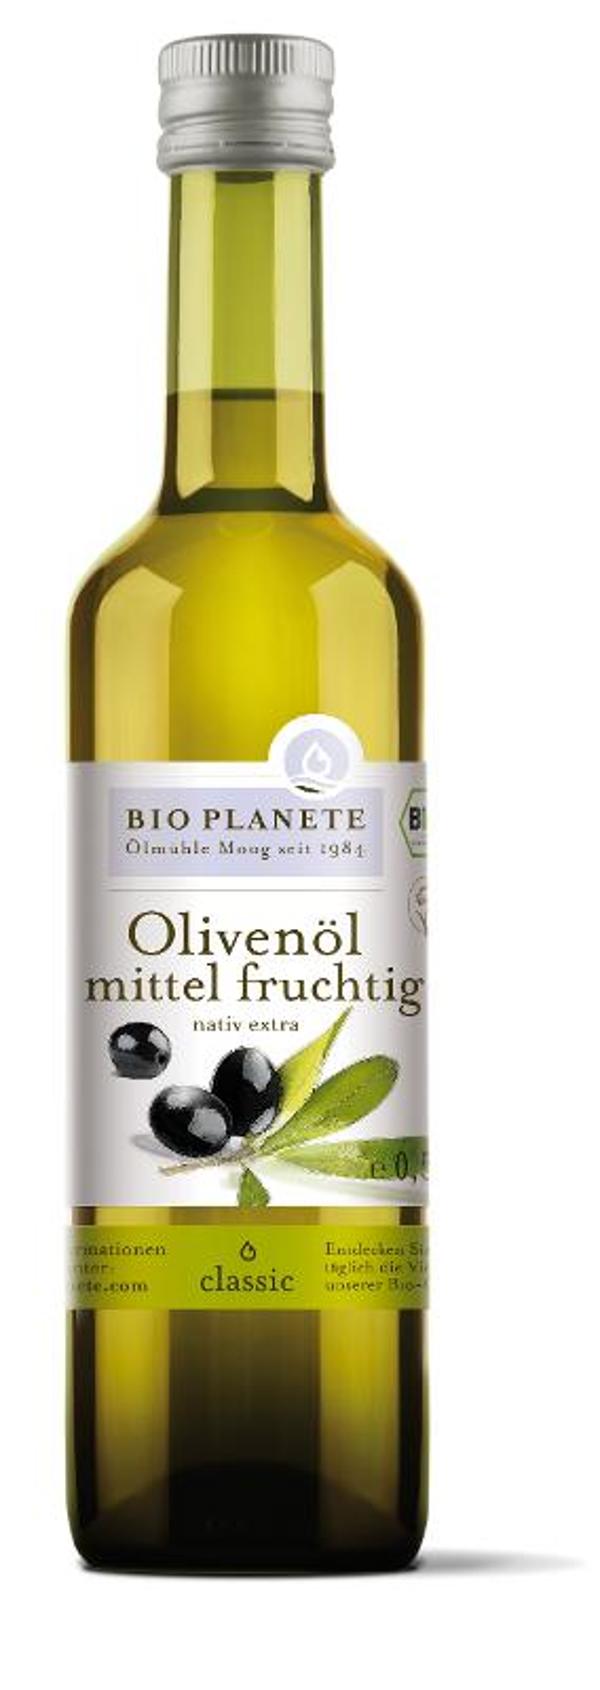 Produktfoto zu Olivenöl nativ extra mittel fruchtig 0,5l Bio Planete